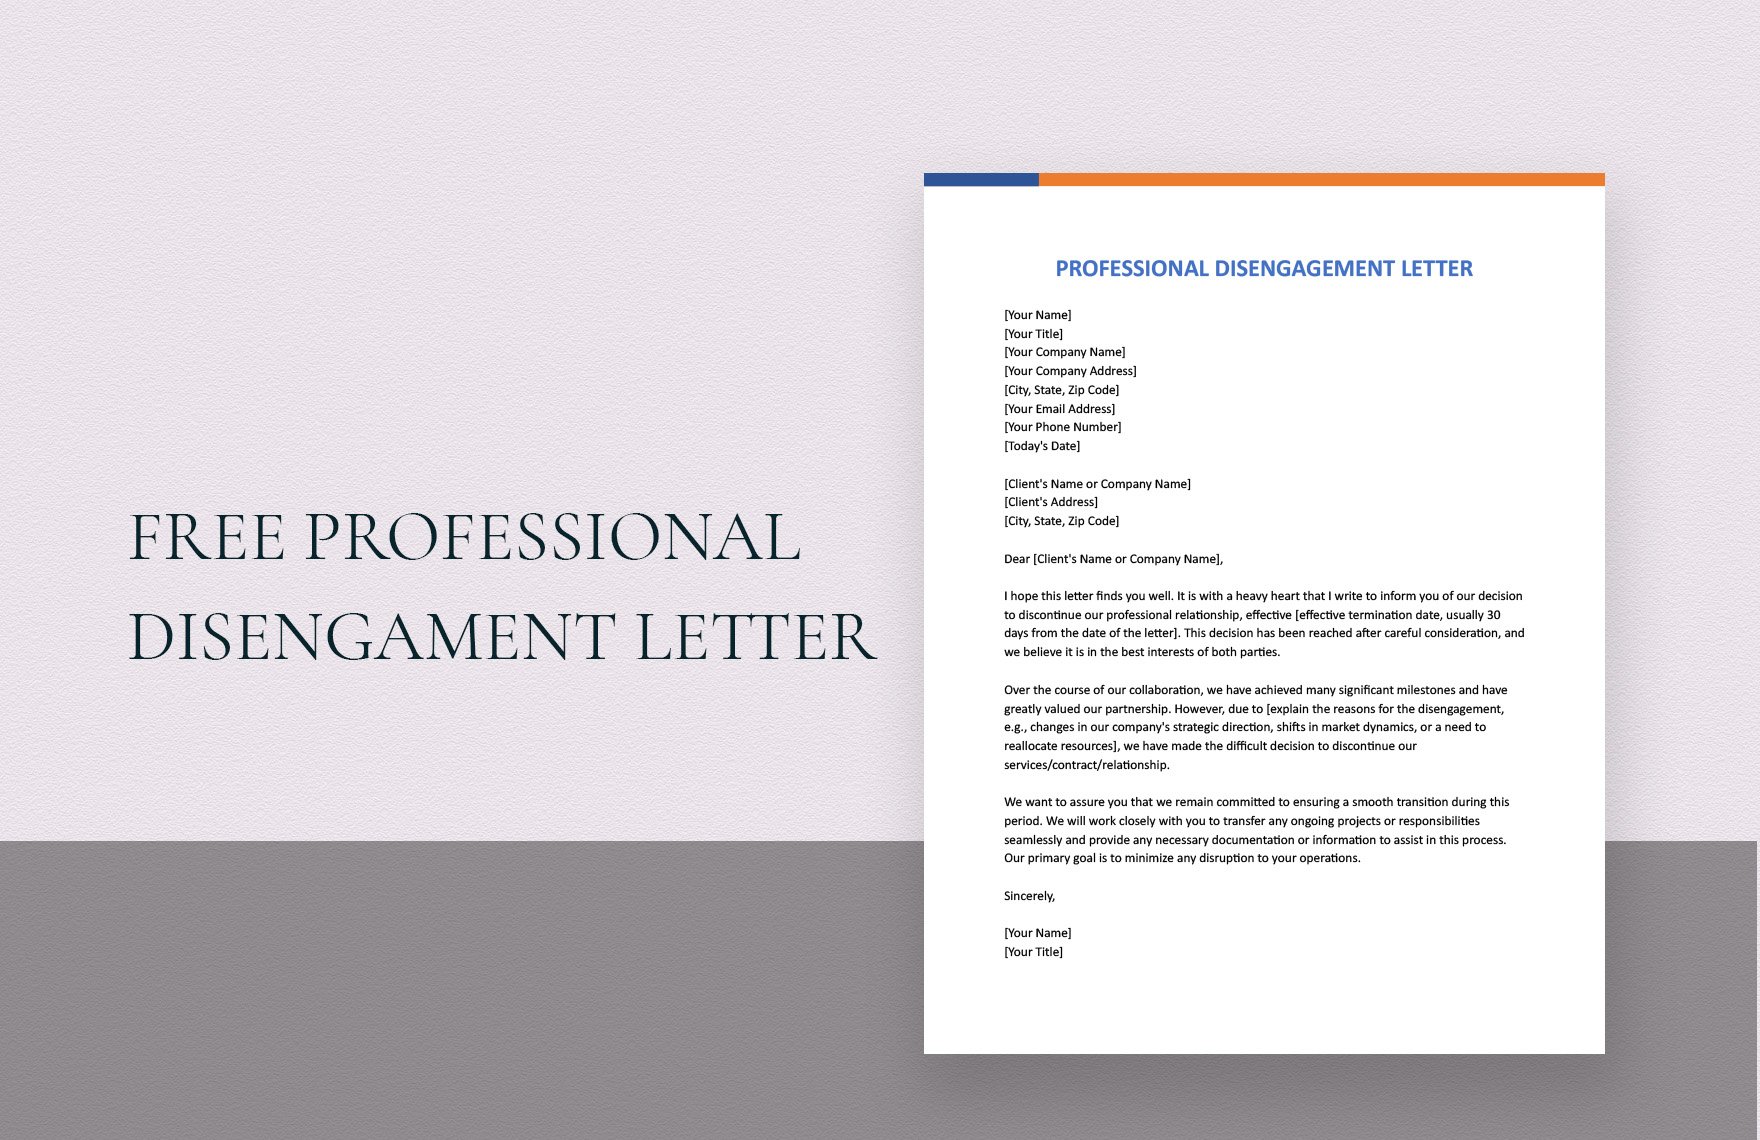 Professional Disengagement Letter in Word, Google Docs